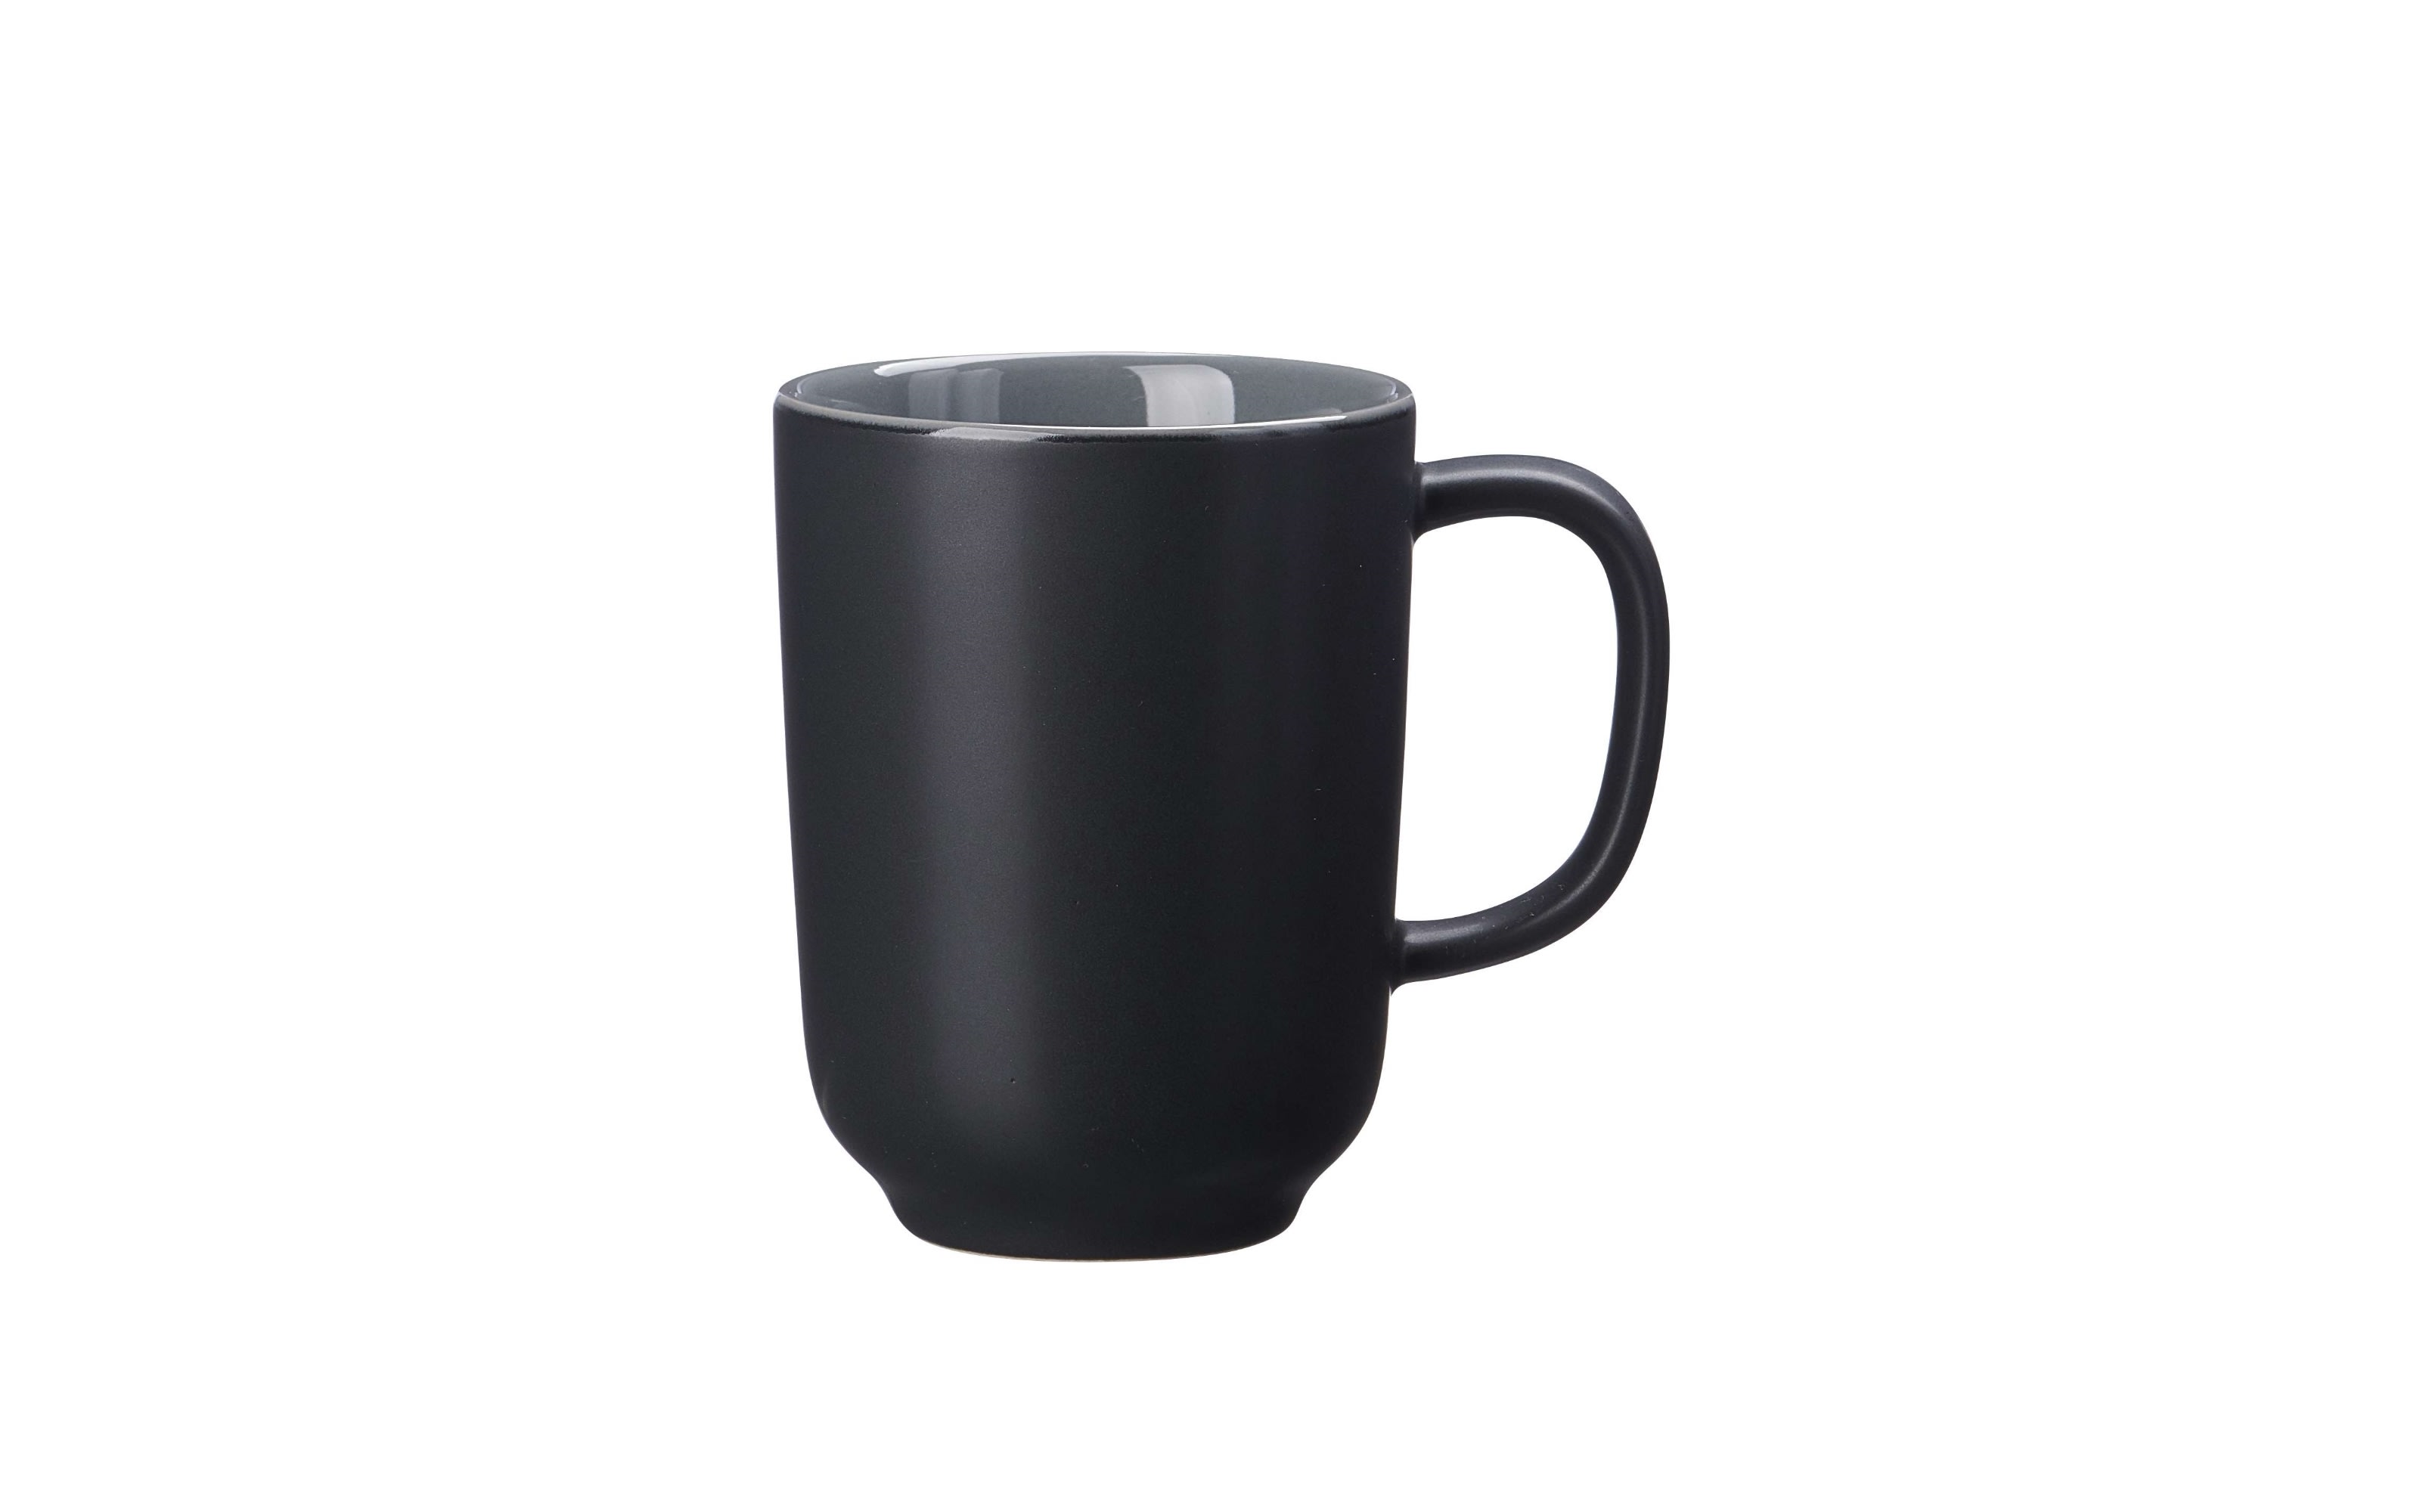 Kaffeebecher Jasper in schwarz/grau, 320 ml